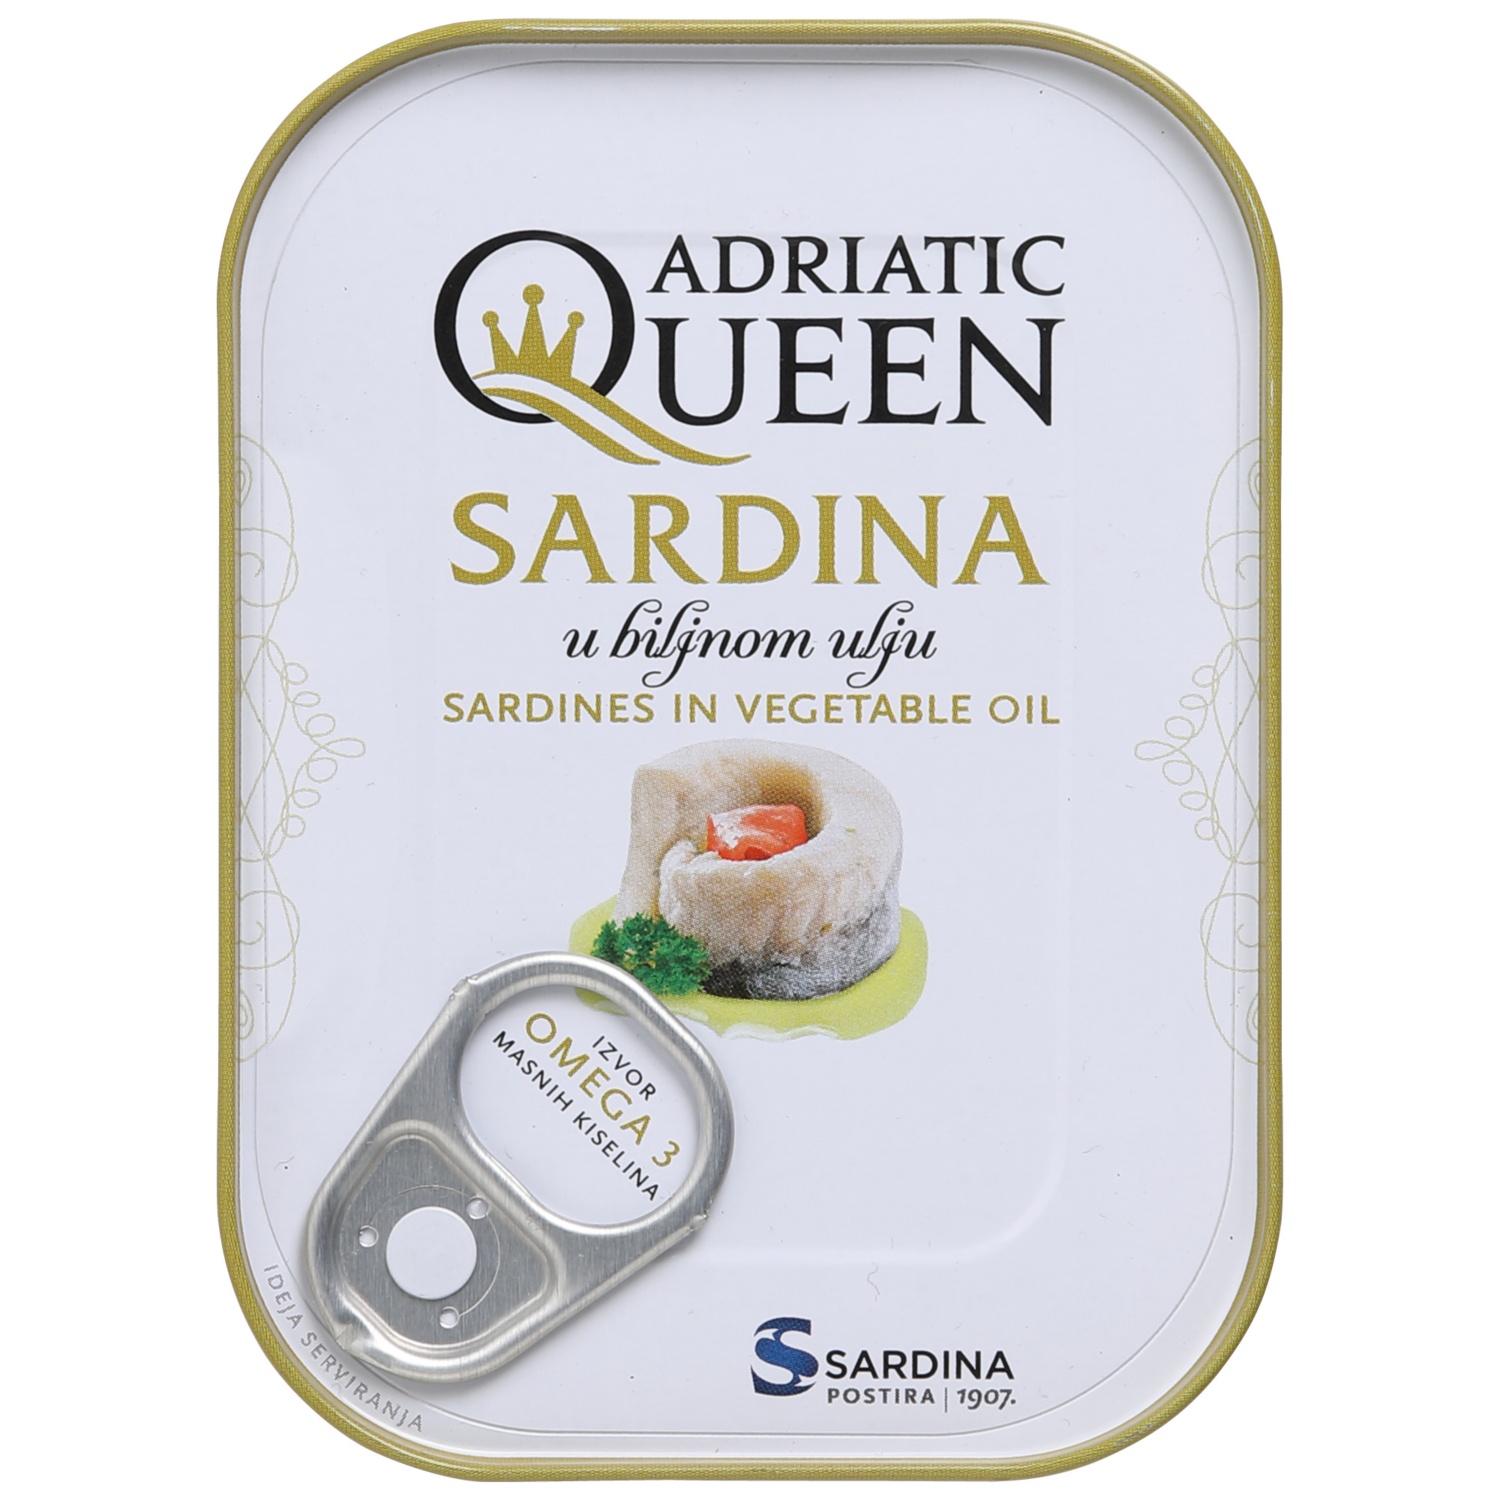 Adriatic Queen Sardinen, Sardines in oil